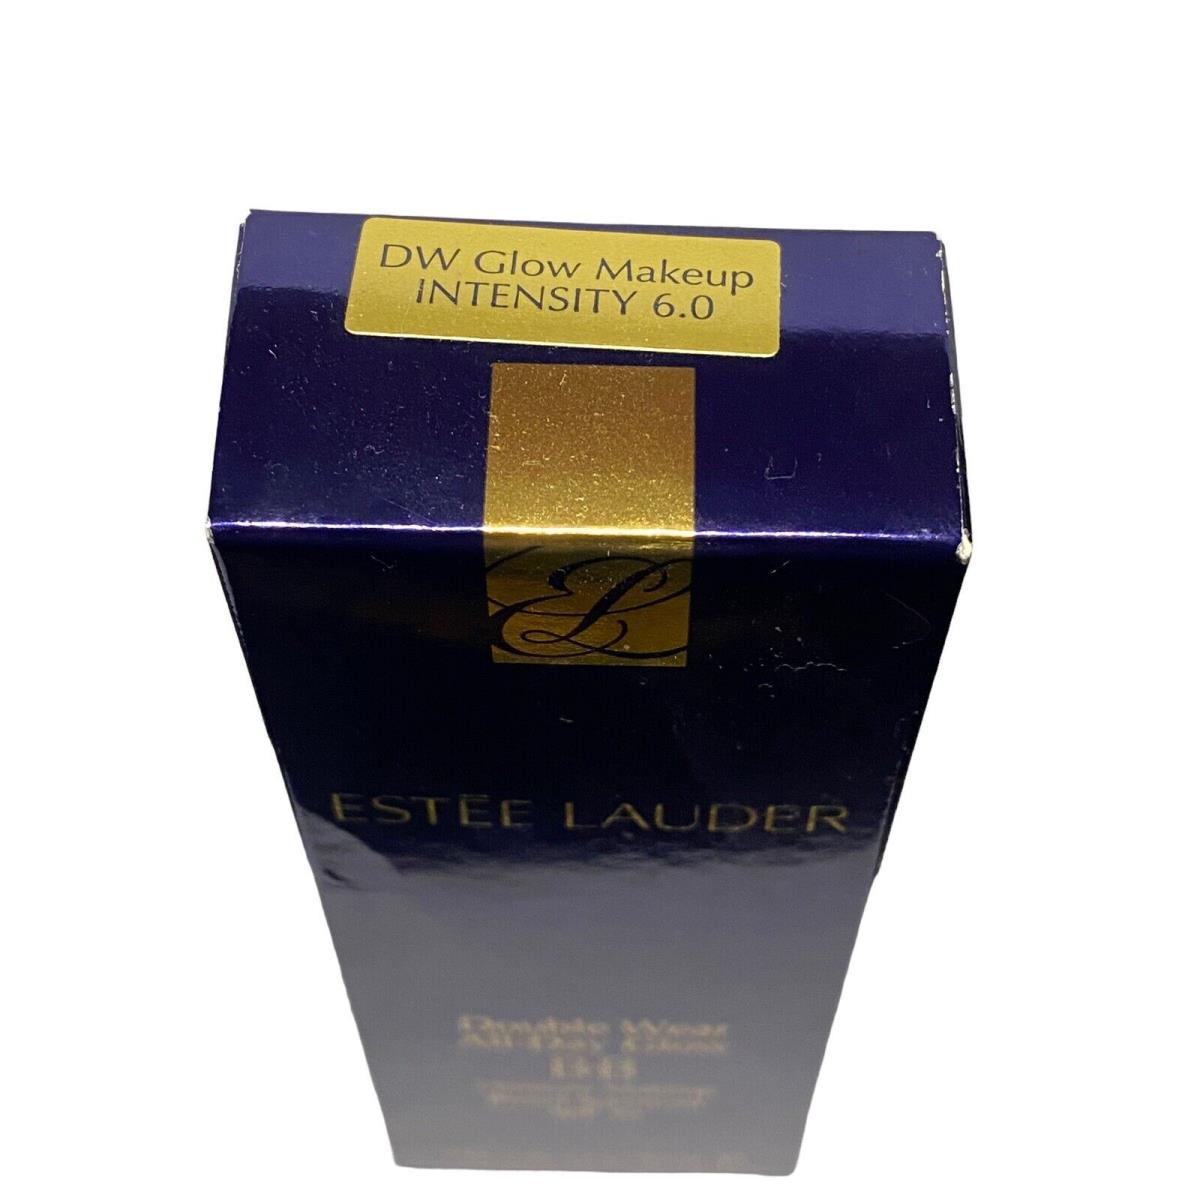 Estee Lauder Double Wear All-day Glow BB Moisture Makeup Intensity 6.0 Rare